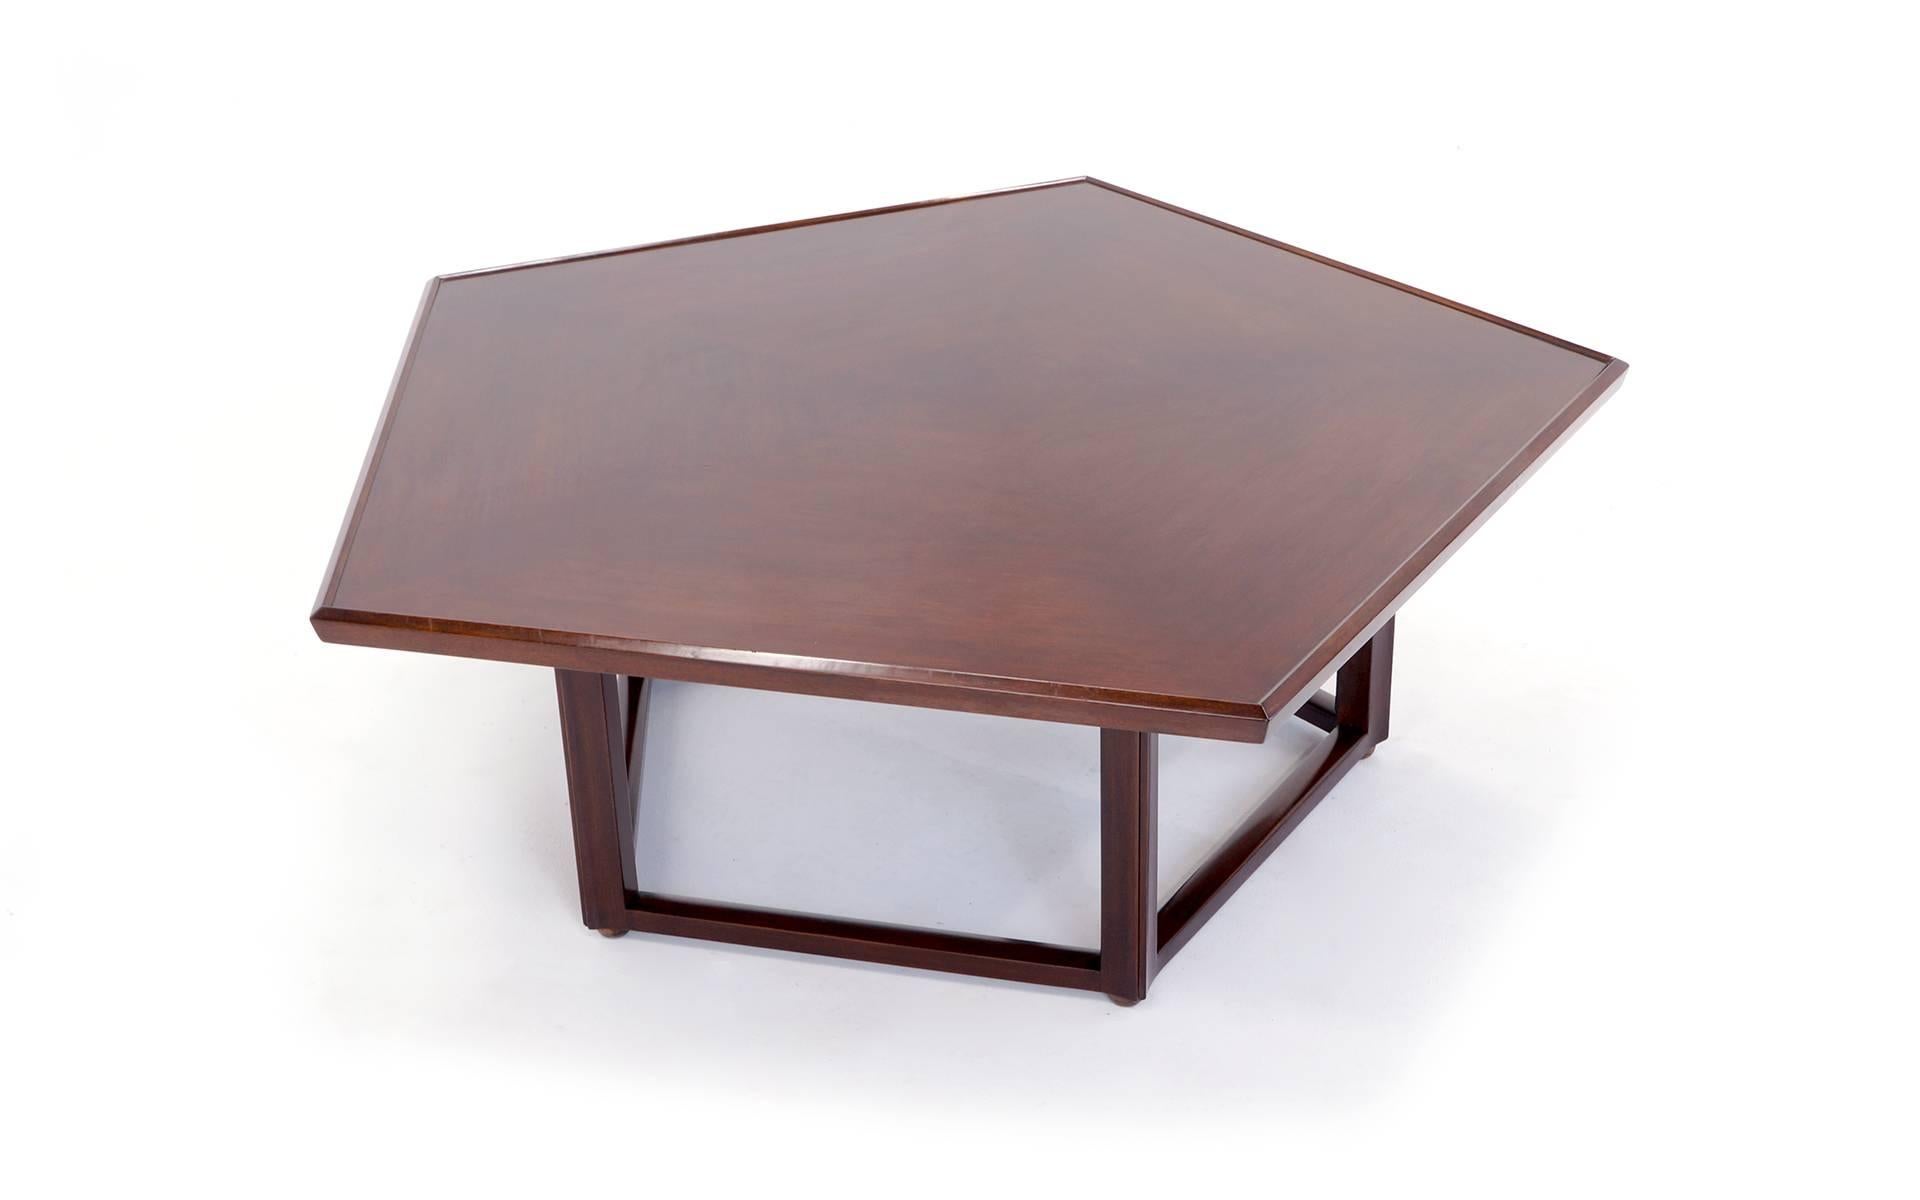 All original, signed, Dunbar pentagonal coffee table designed by Edward Wormley. Beautiful patina on the original finish.